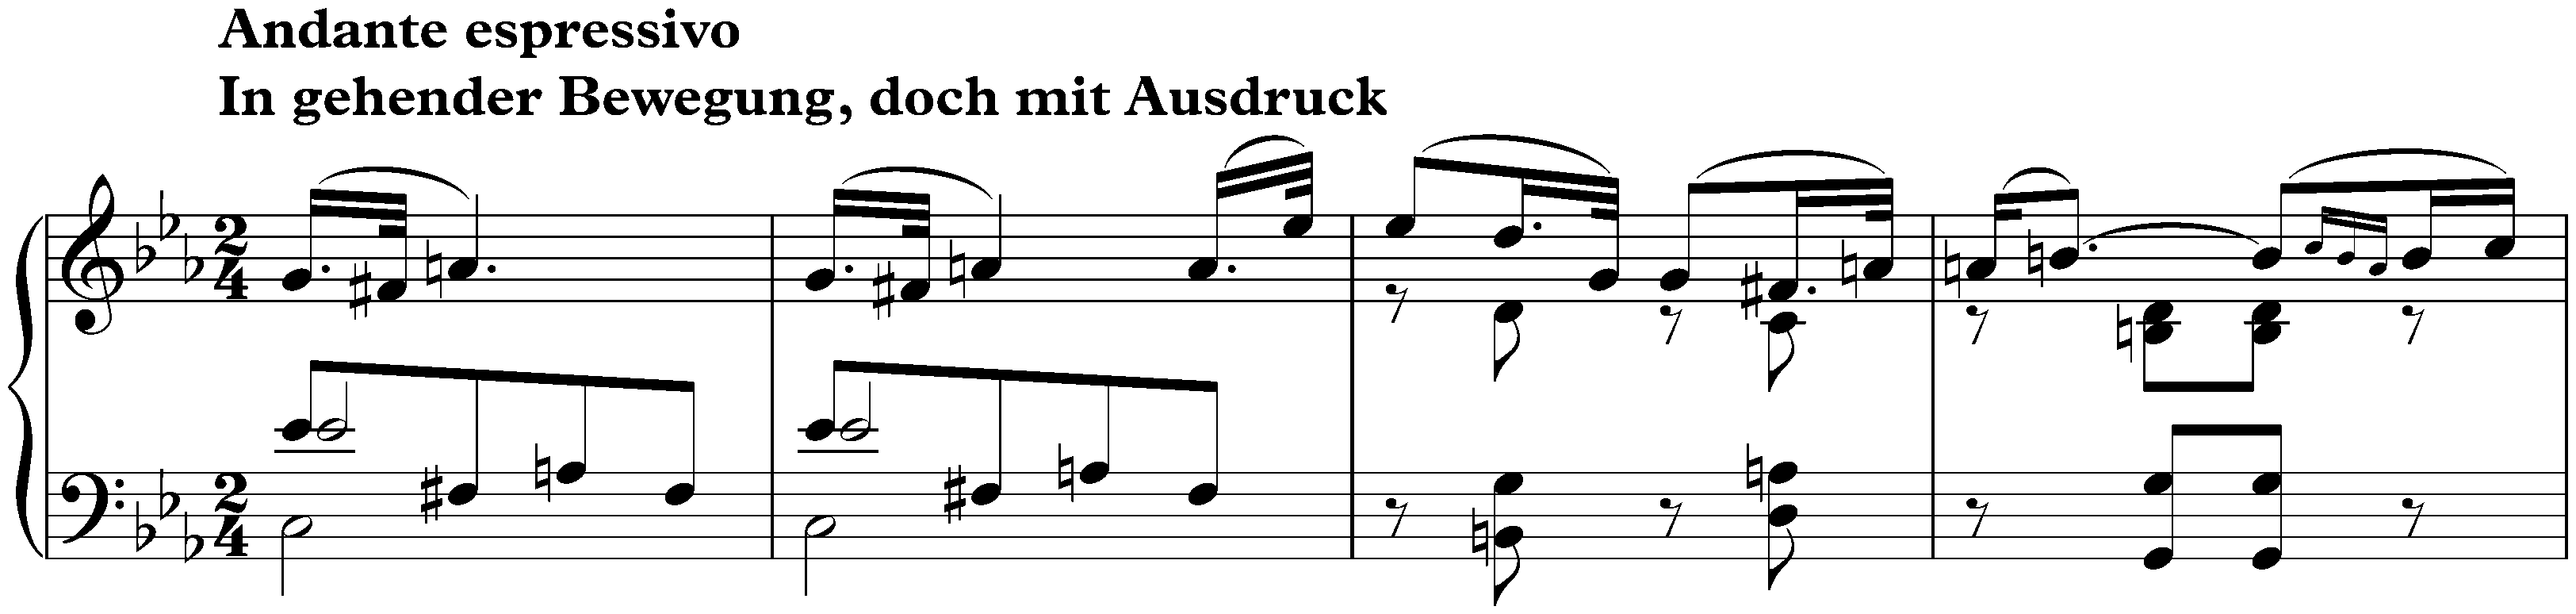 Sonata no. 26 in E-flat major, op. 81a (Les Adieux); 2. Die Abwesenheit (L’Absence): Andante espressivo